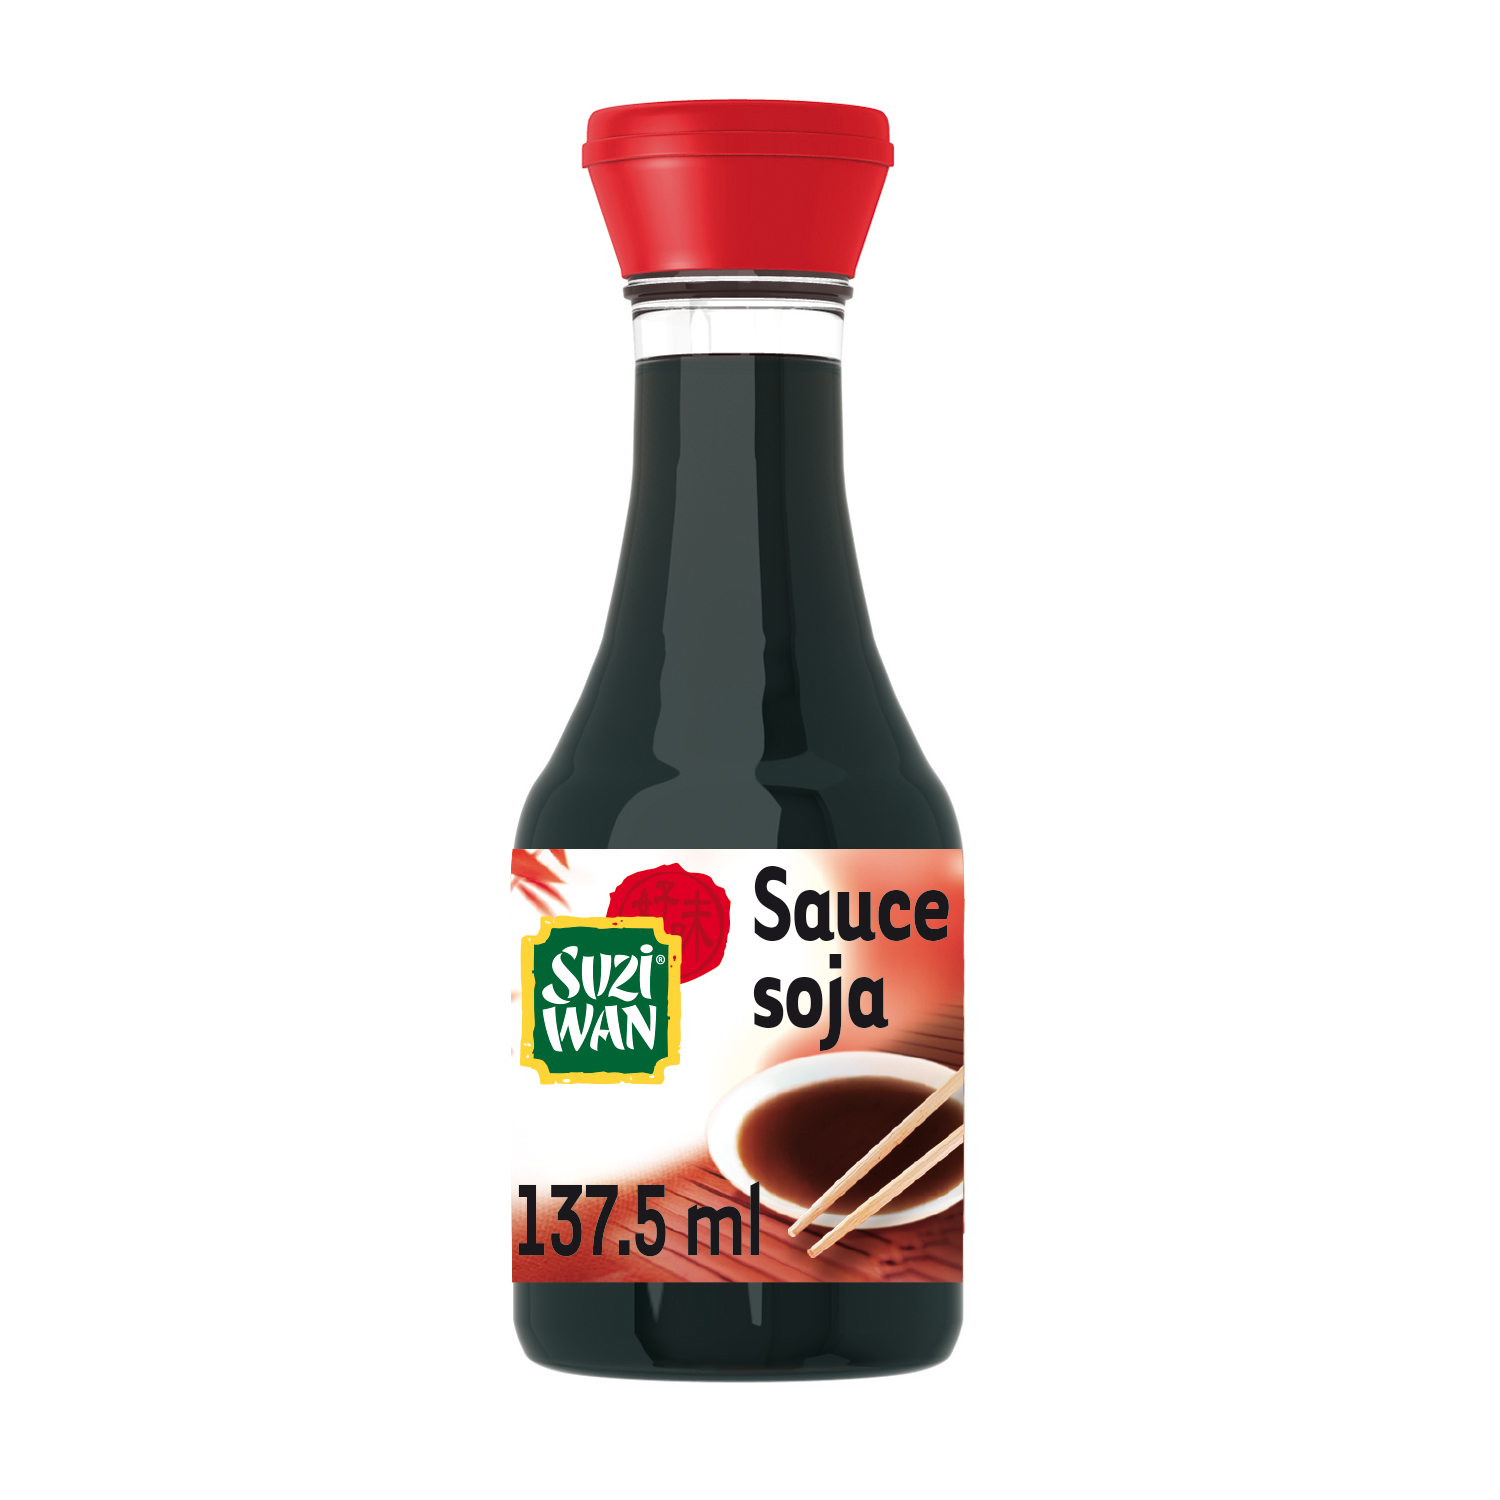 SUZI WAN Sauce soja sucrée 137,5ml pas cher 